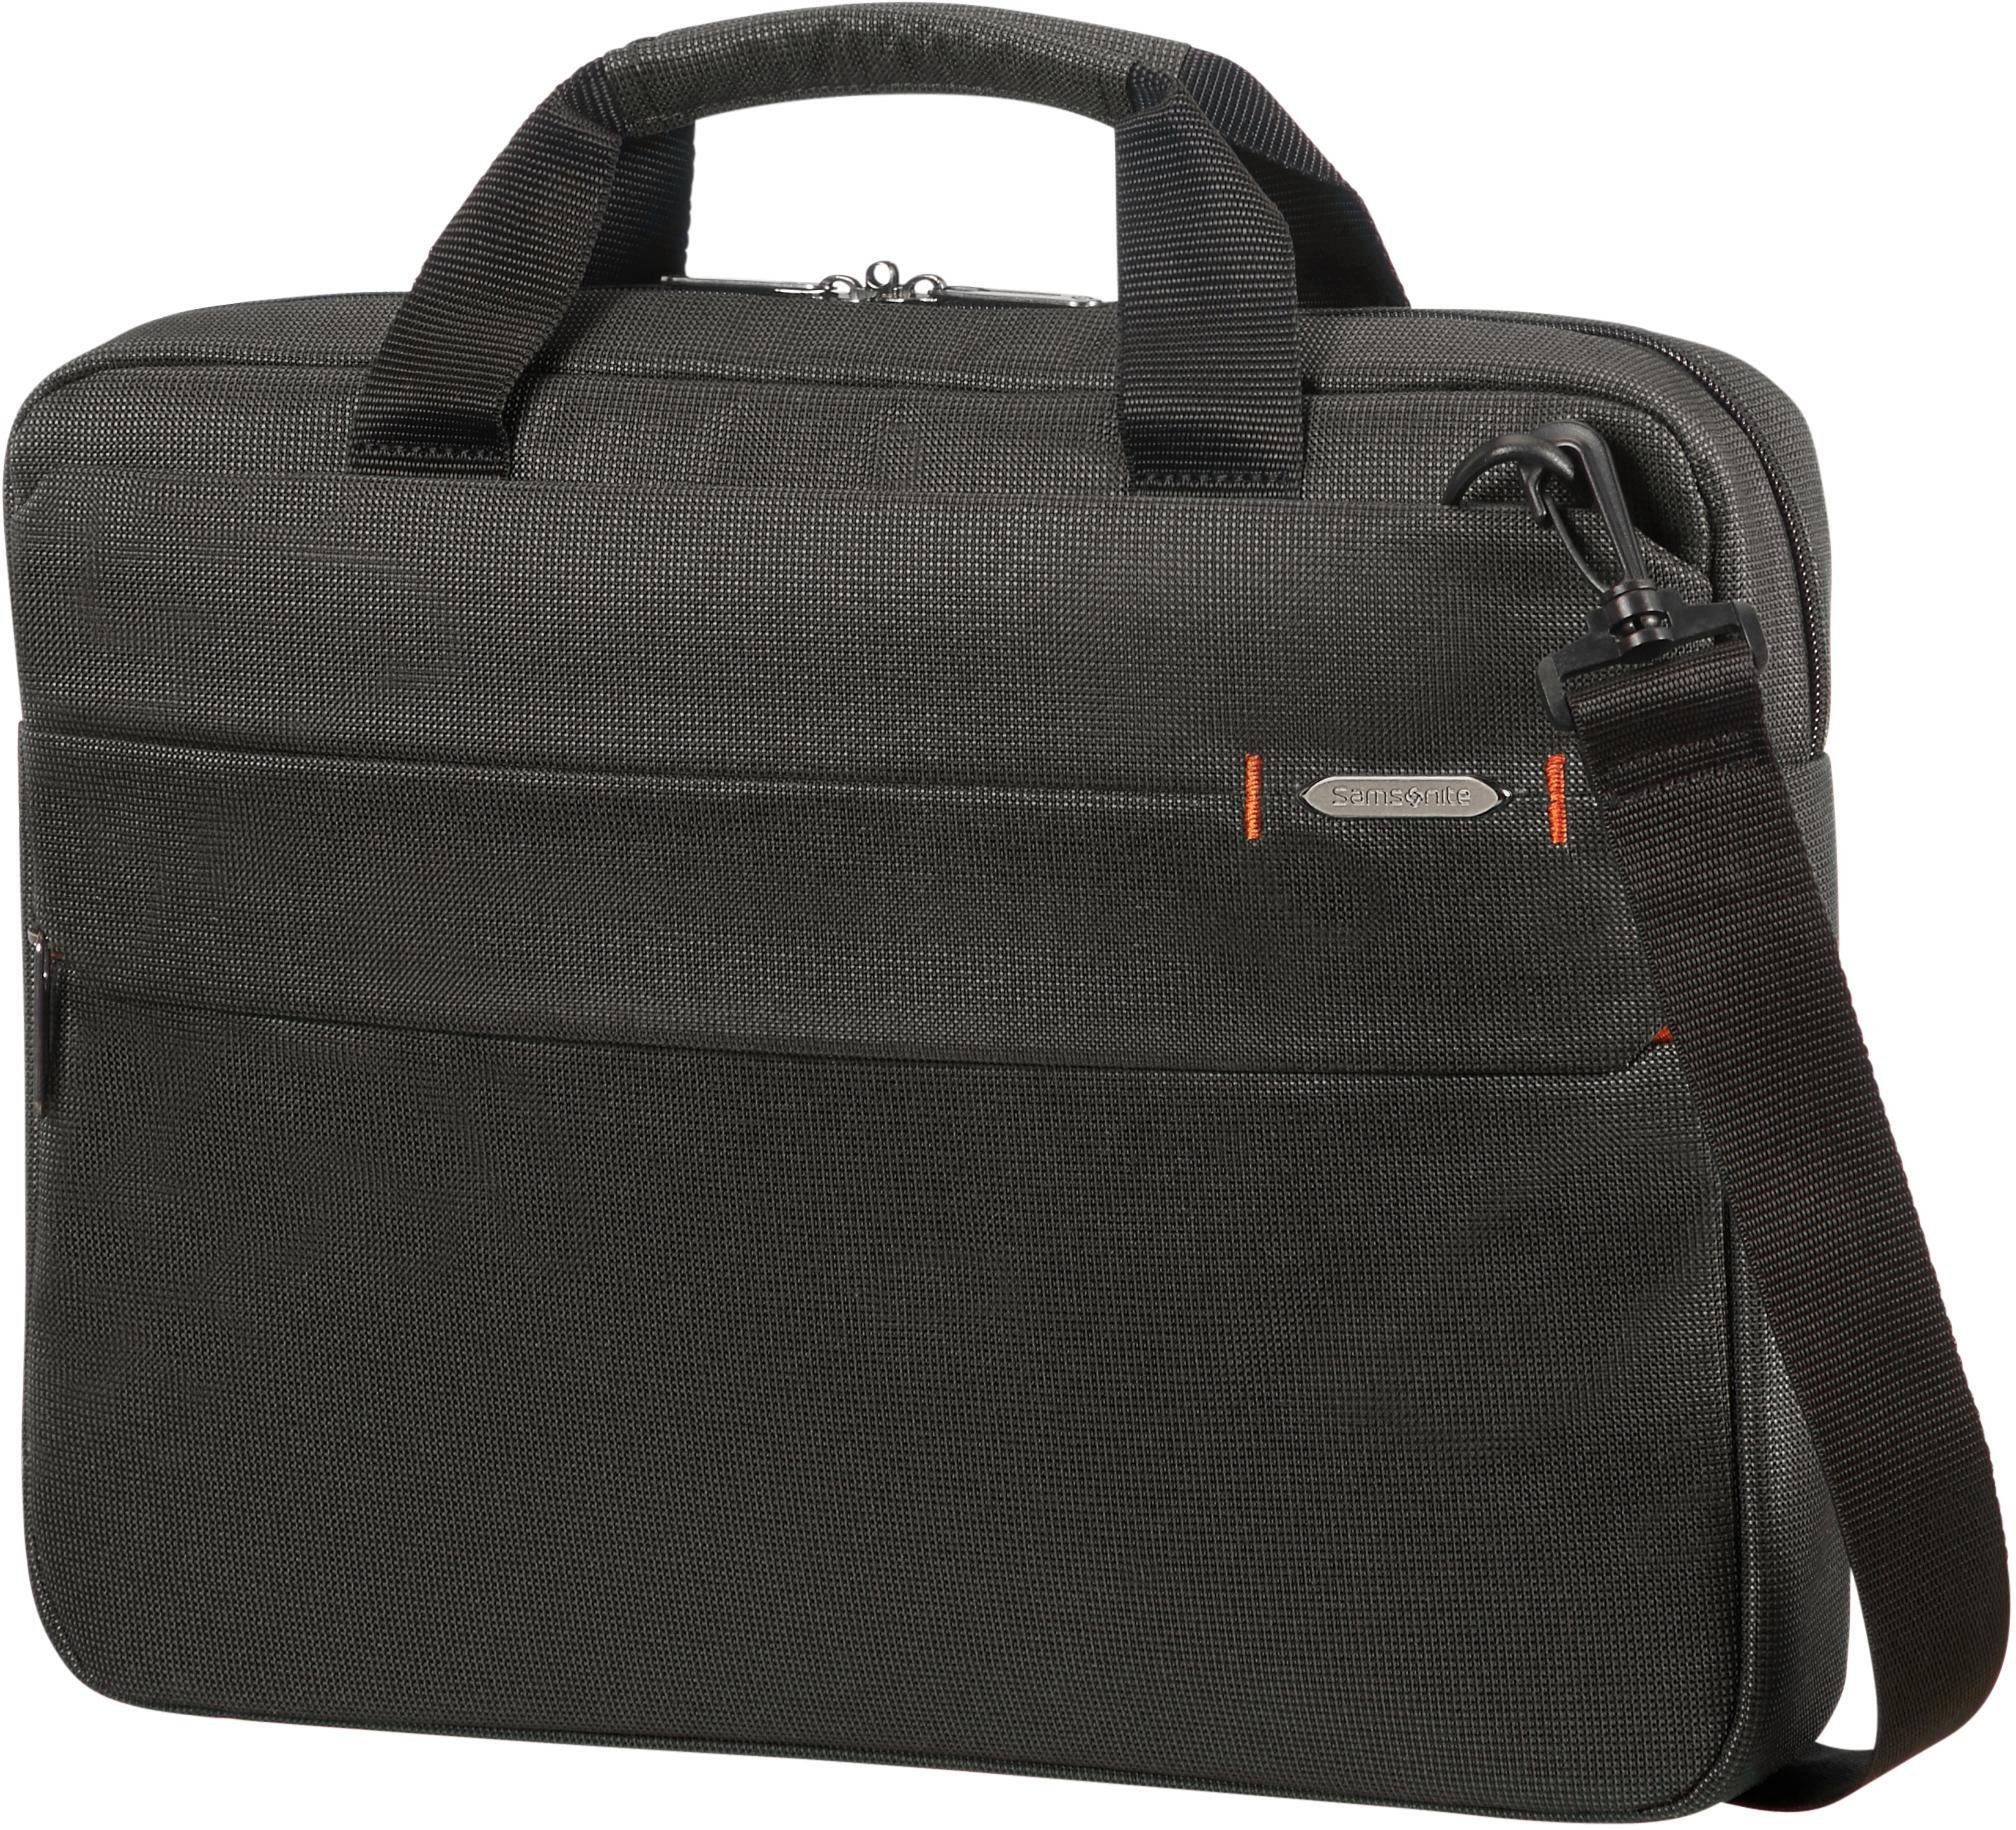 Samsonite Black Label Business Laptoptasche Taschen Businesstaschen Notebooktaschen 